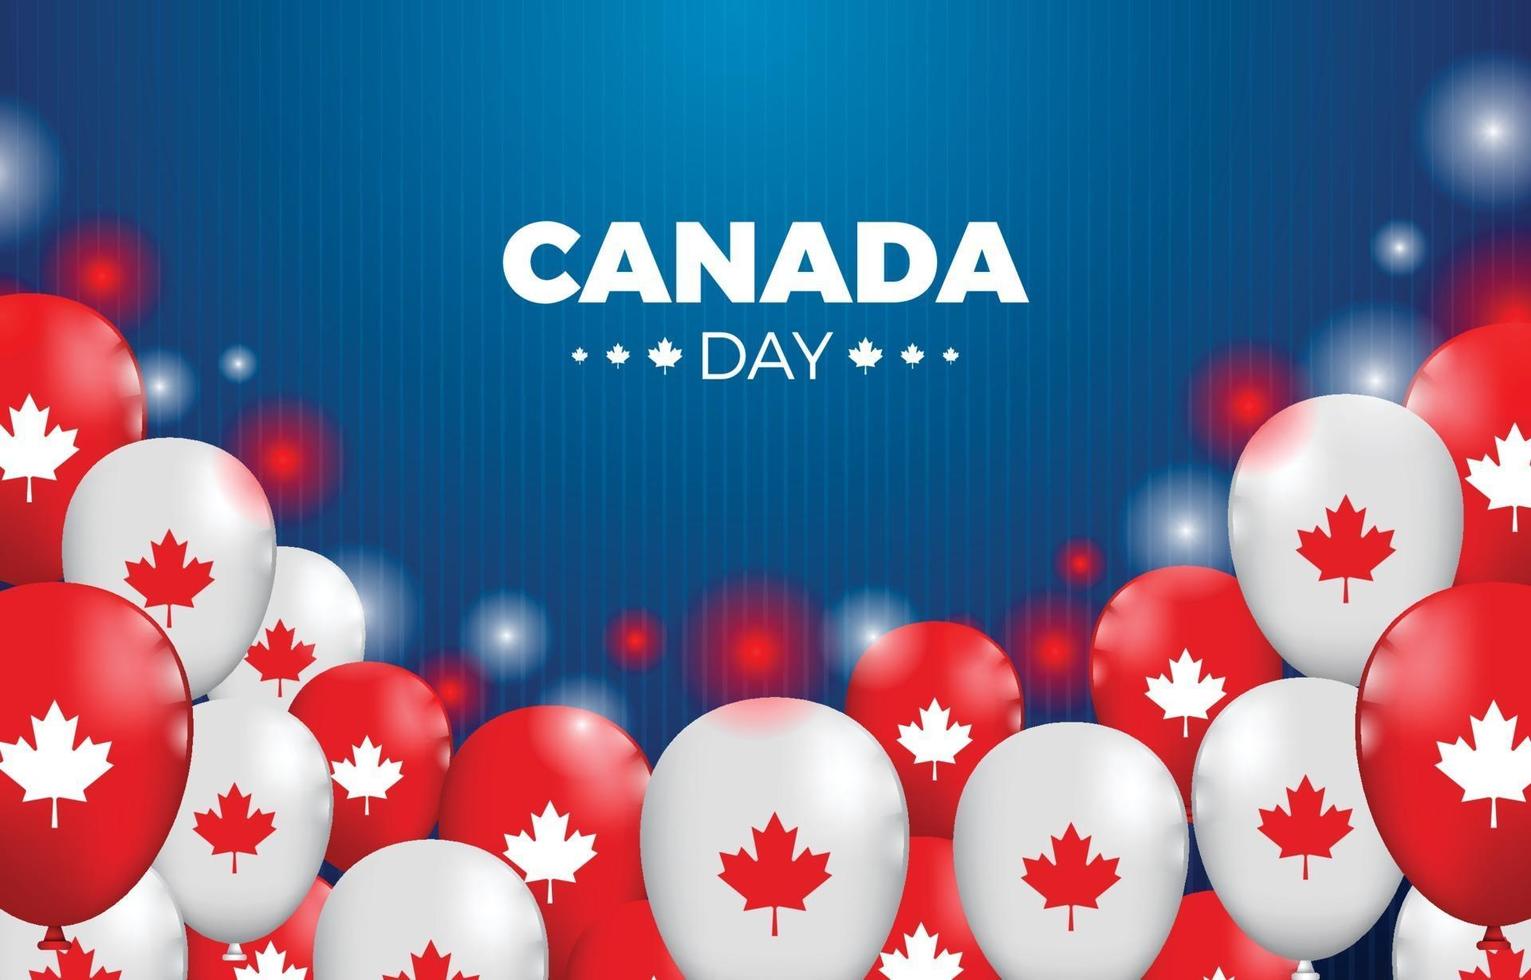 Kanada-Tag mit Ballons und funkelnder Illustration vektor